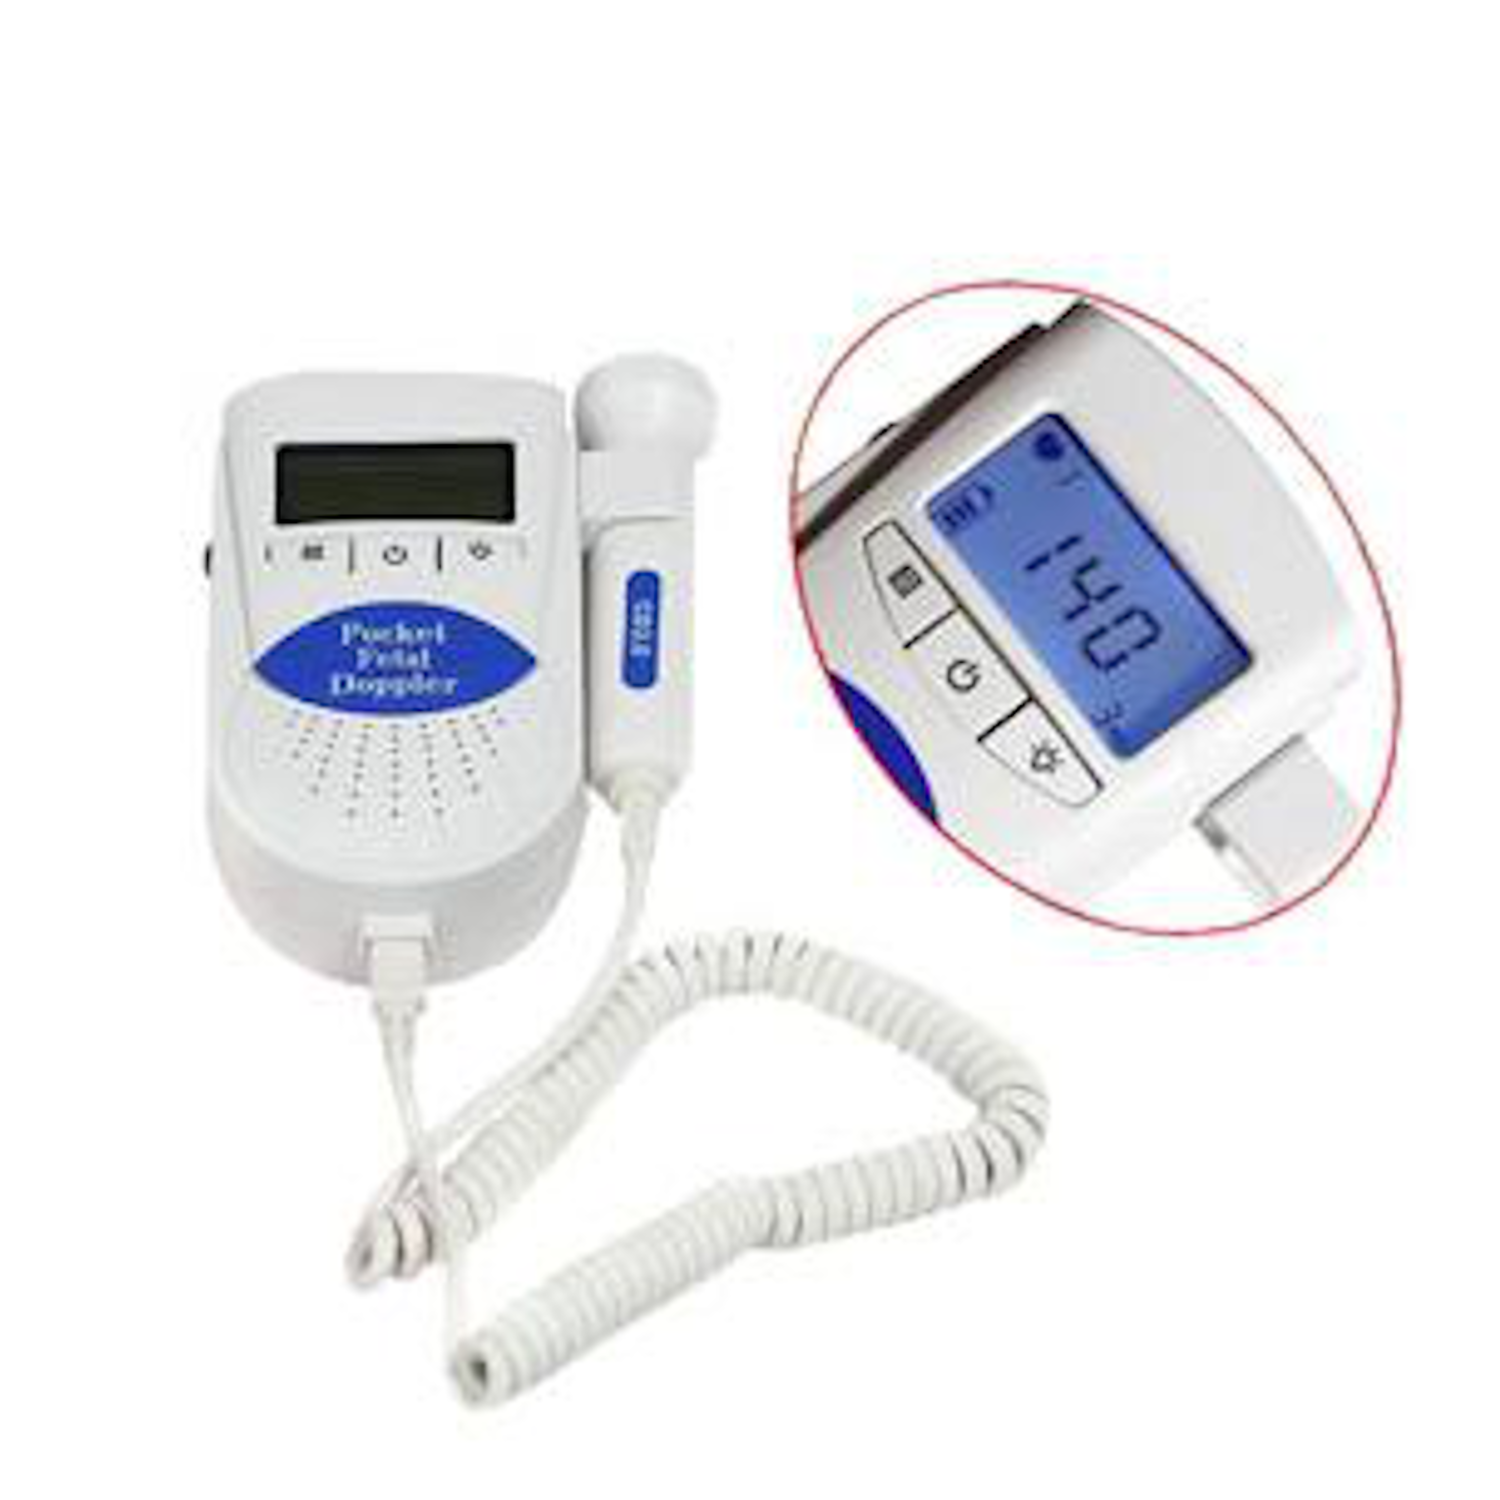 Portable Fetal Doppler with speaker Handheld - Atlantic Healthcare Products